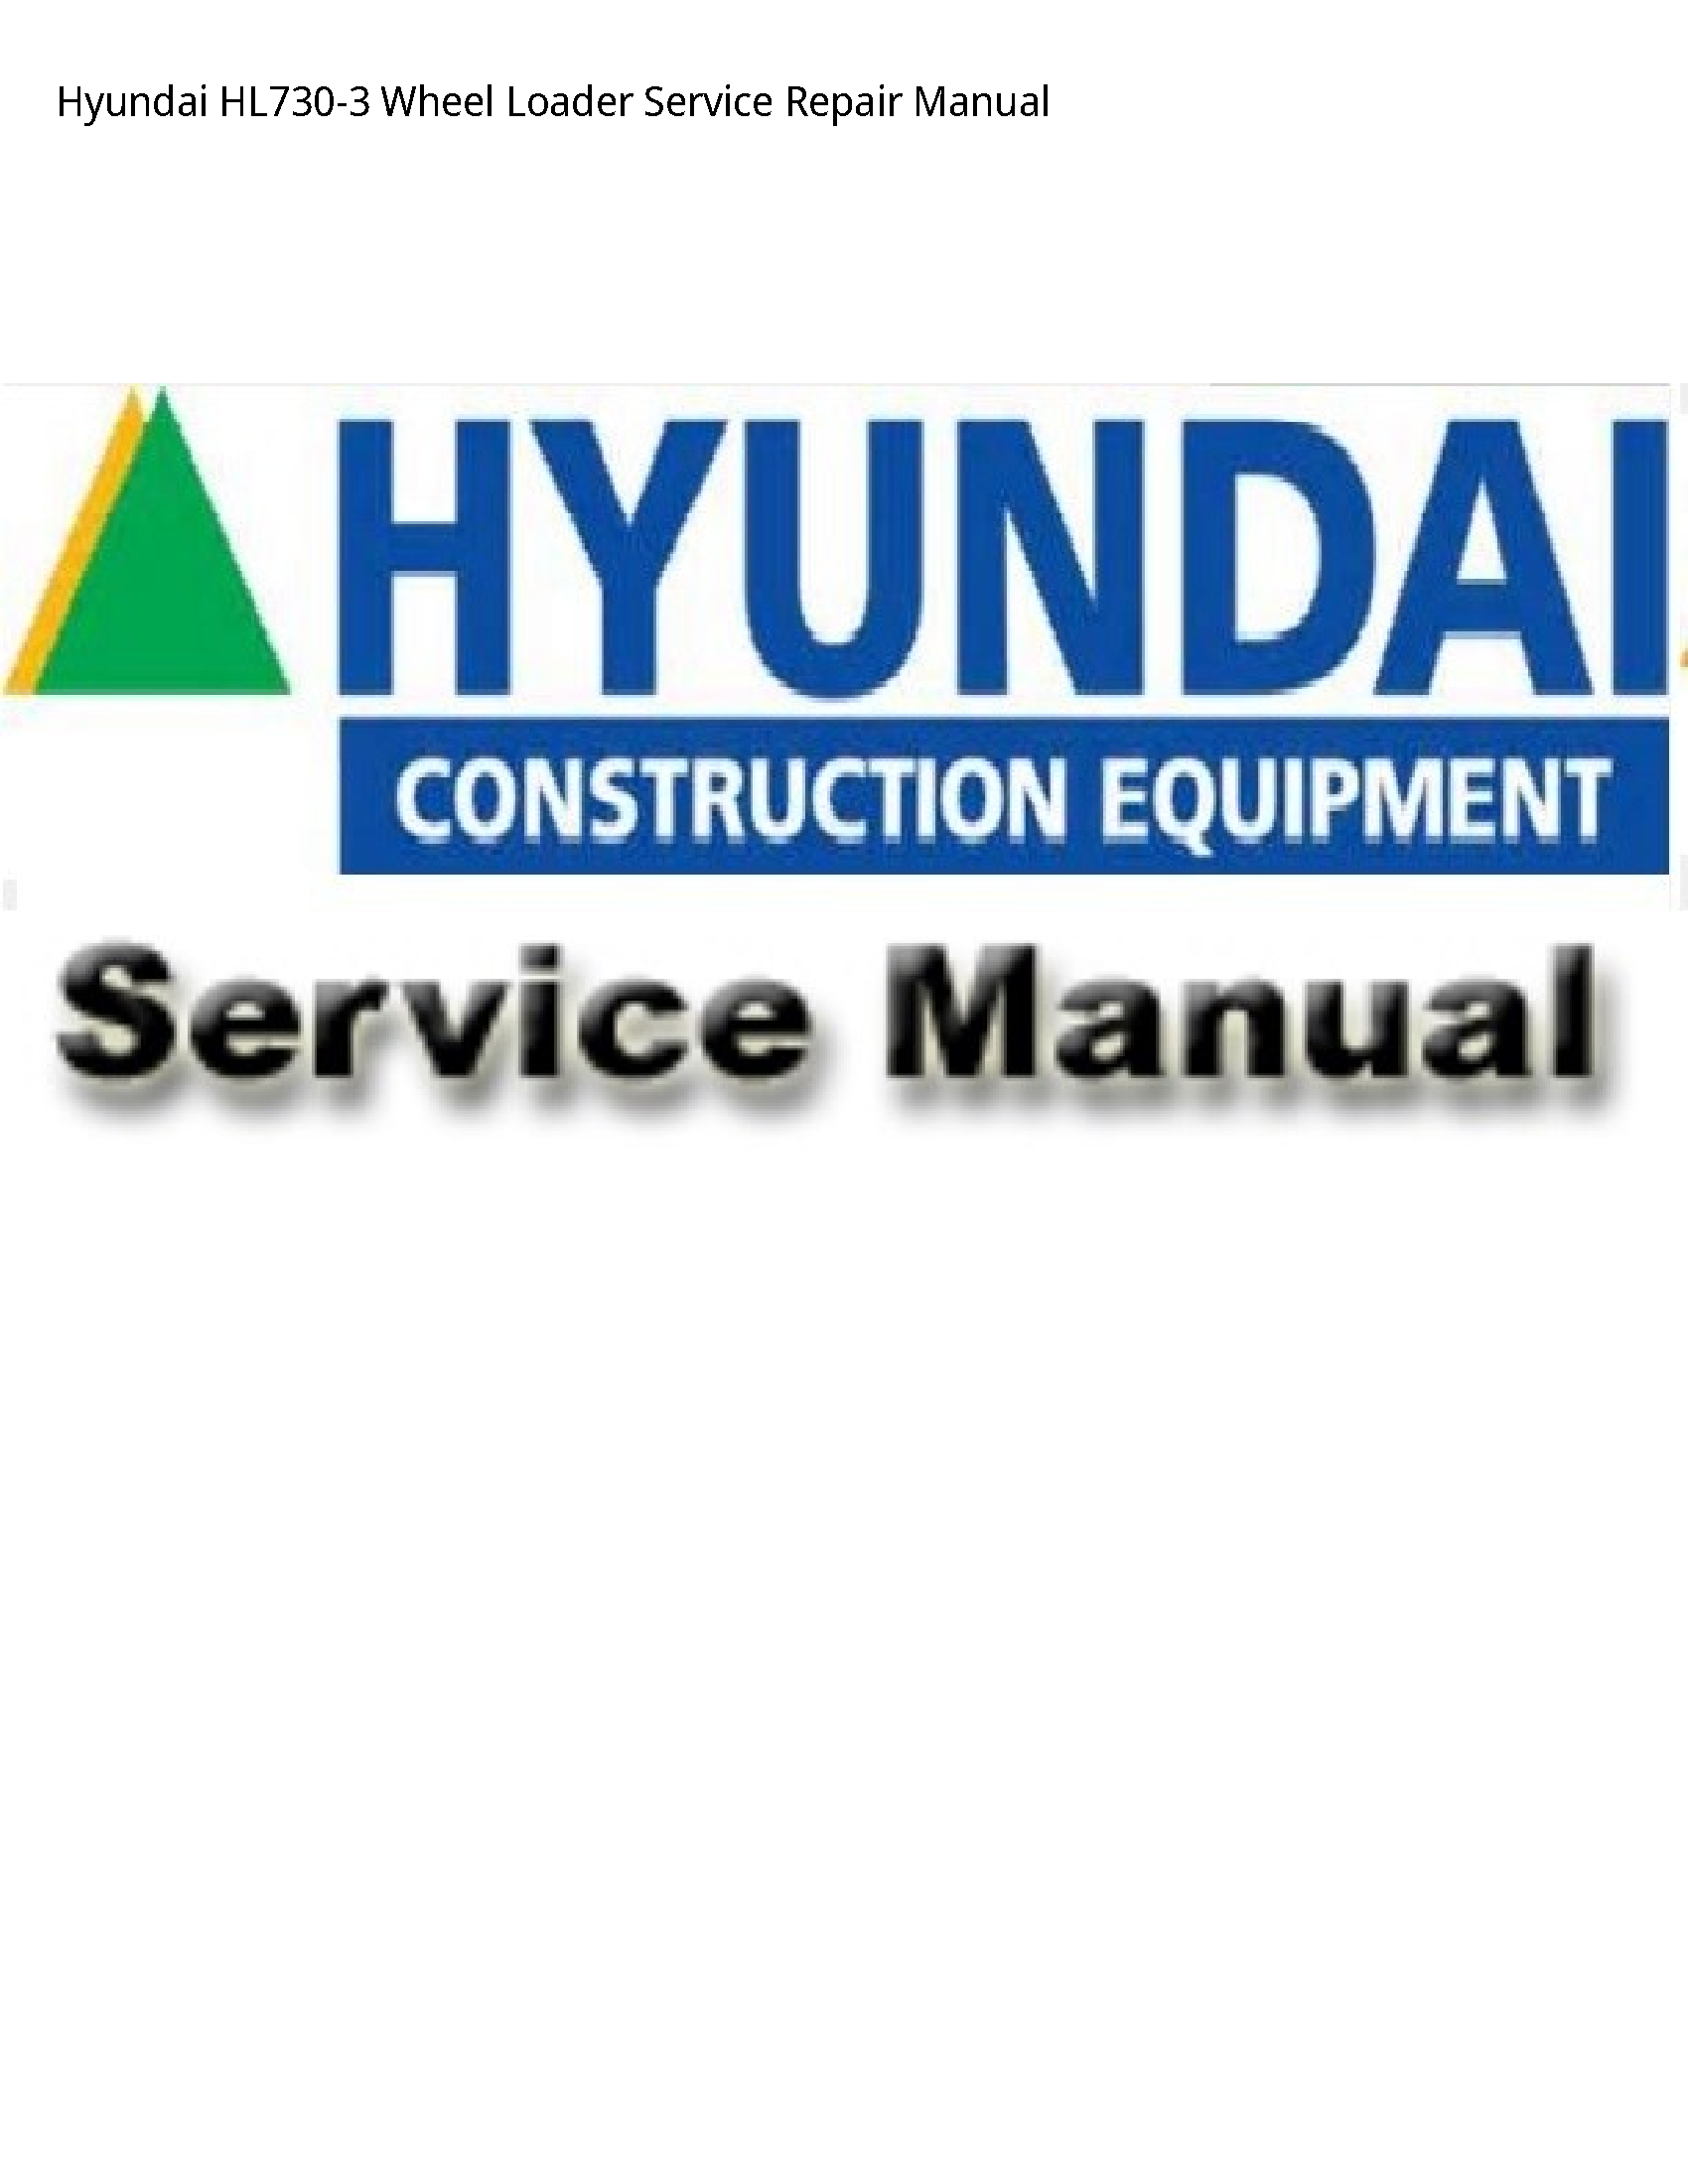 Hyundai HL730-3 Wheel Loader manual